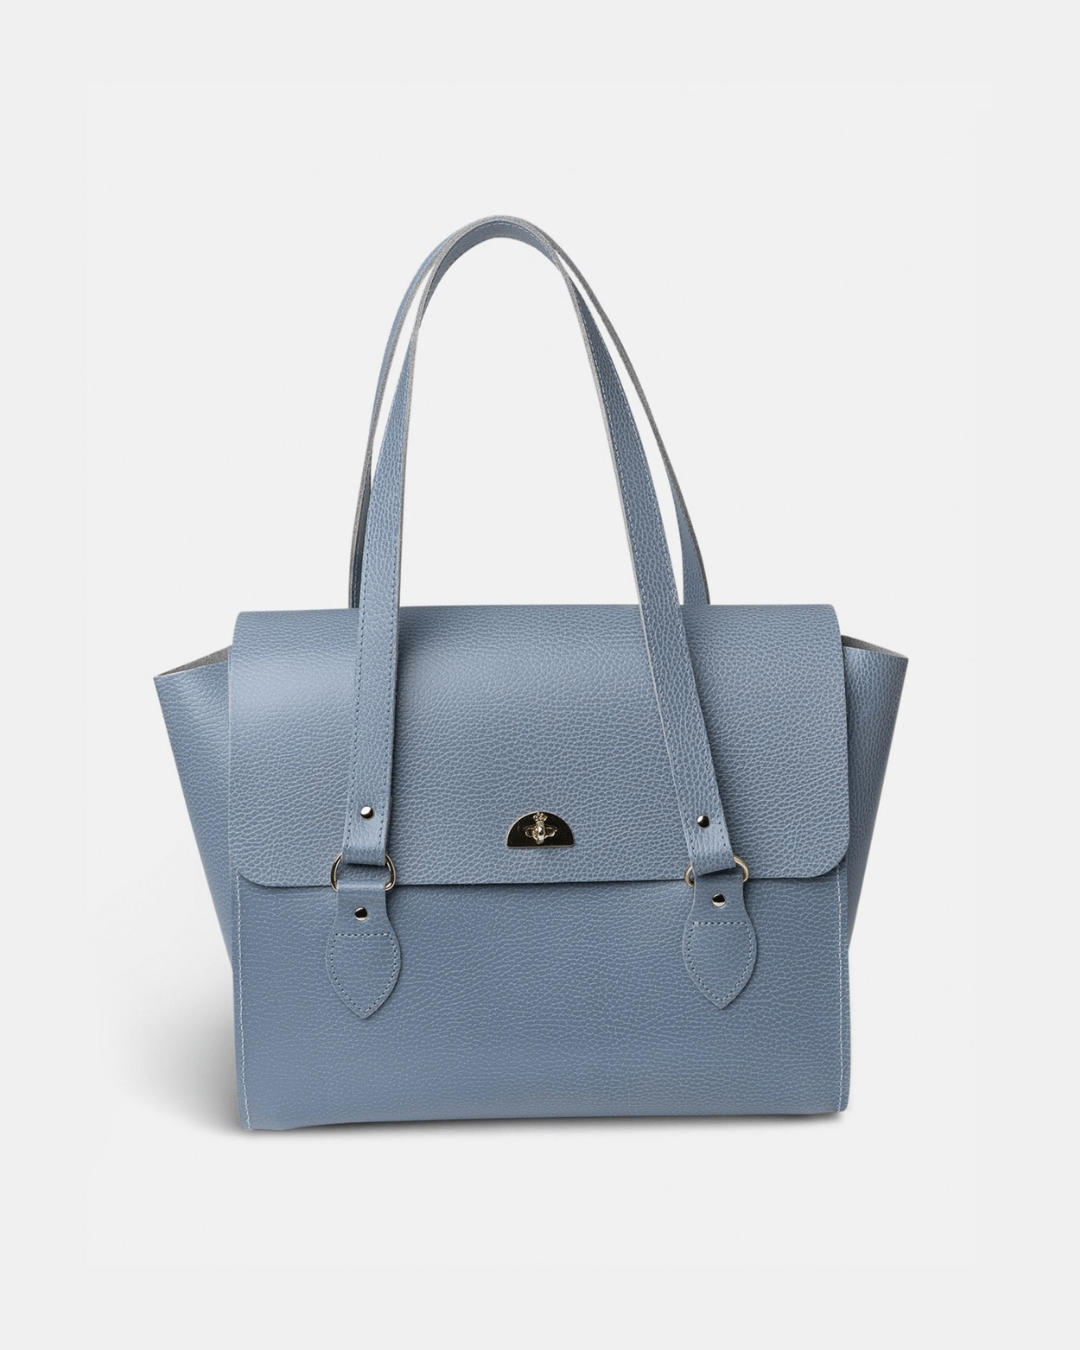 The Cambridge Satchel Co. Womens Grey Leather Handbag